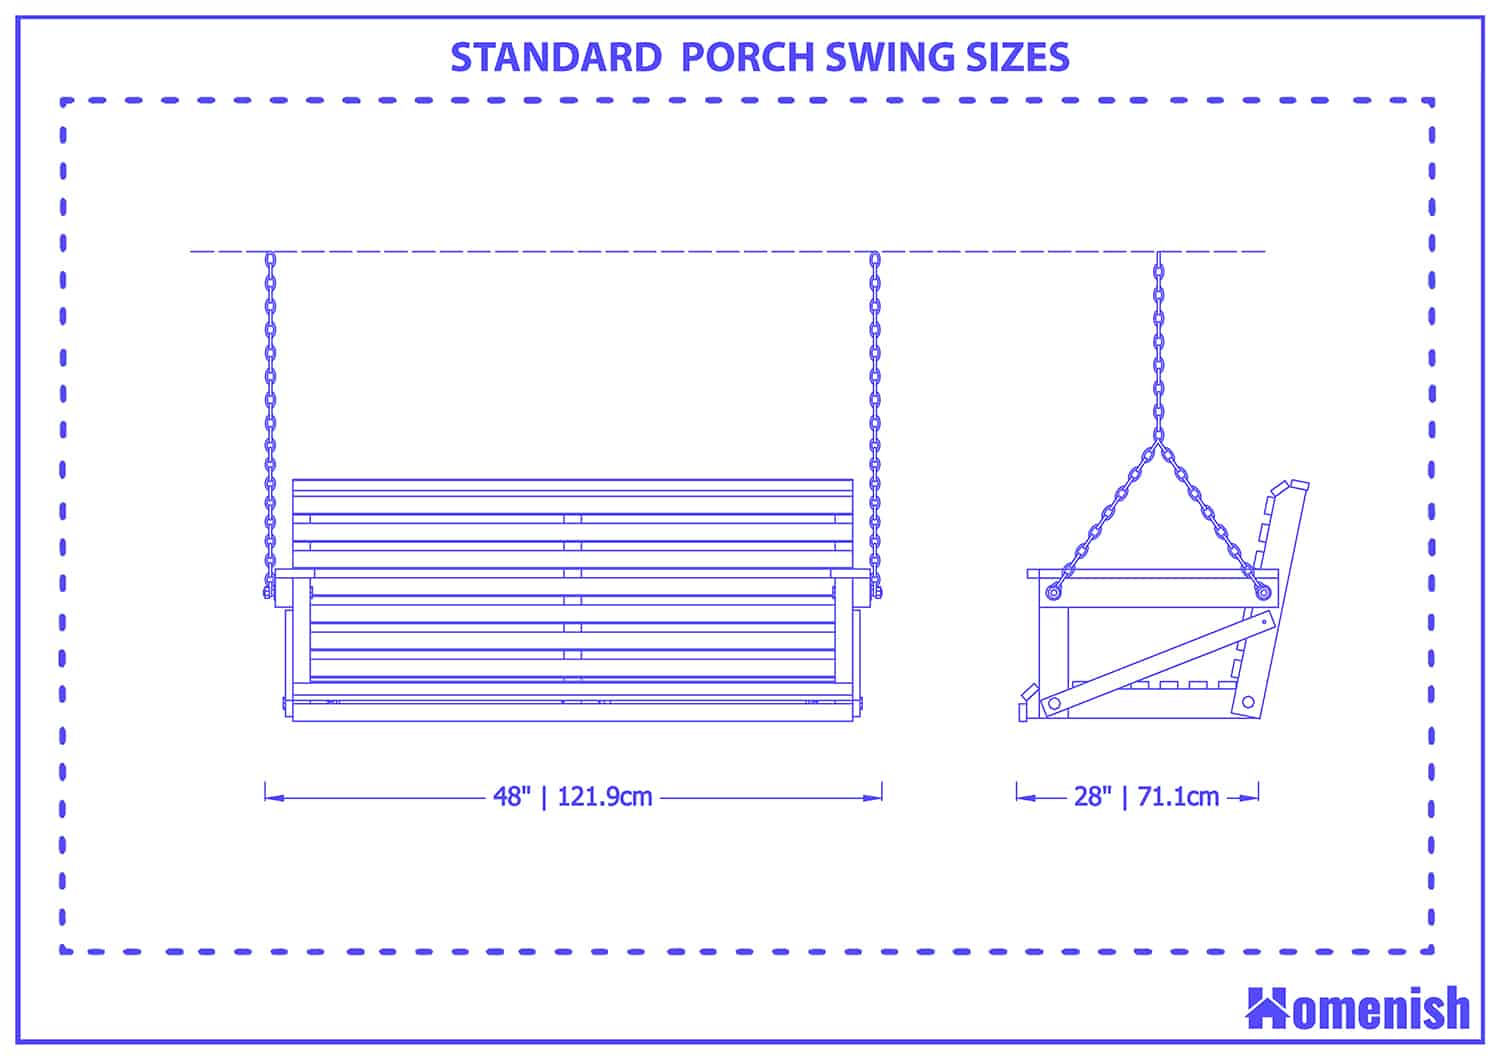 Standard porch swing size